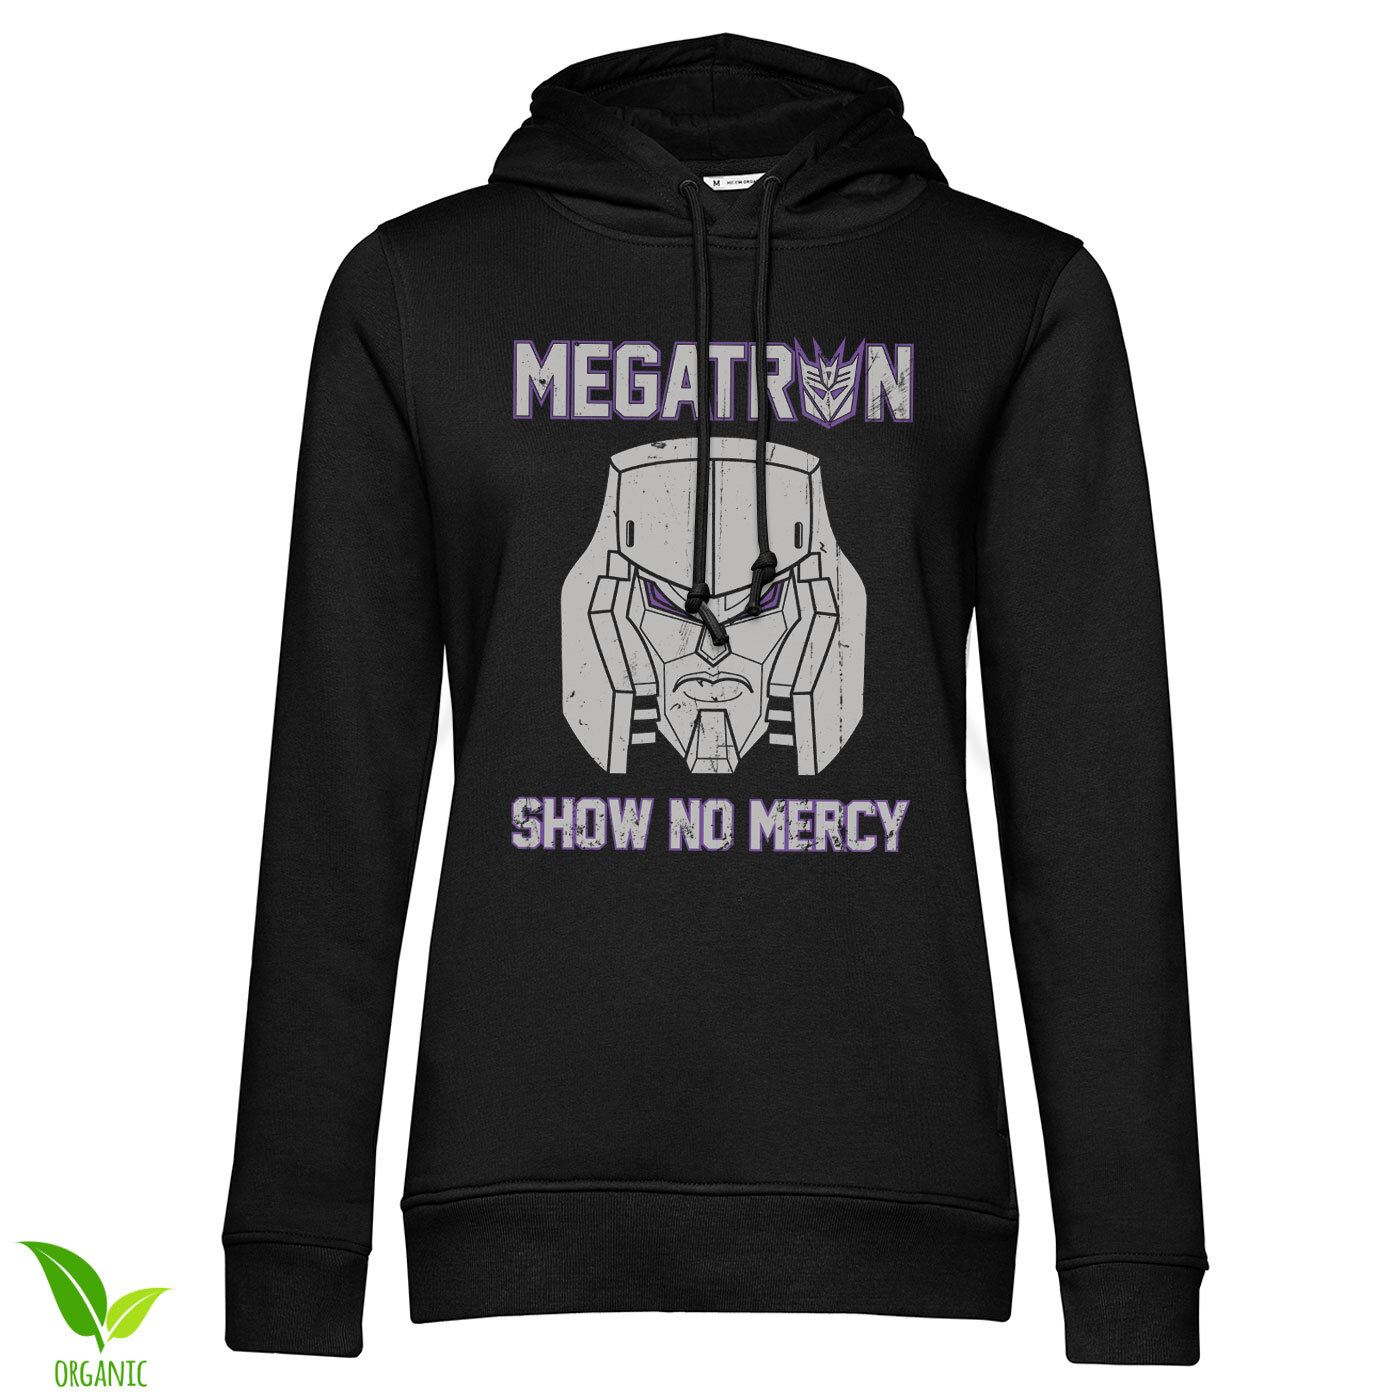 Megatron - Show No Mercy Girls Hoodie